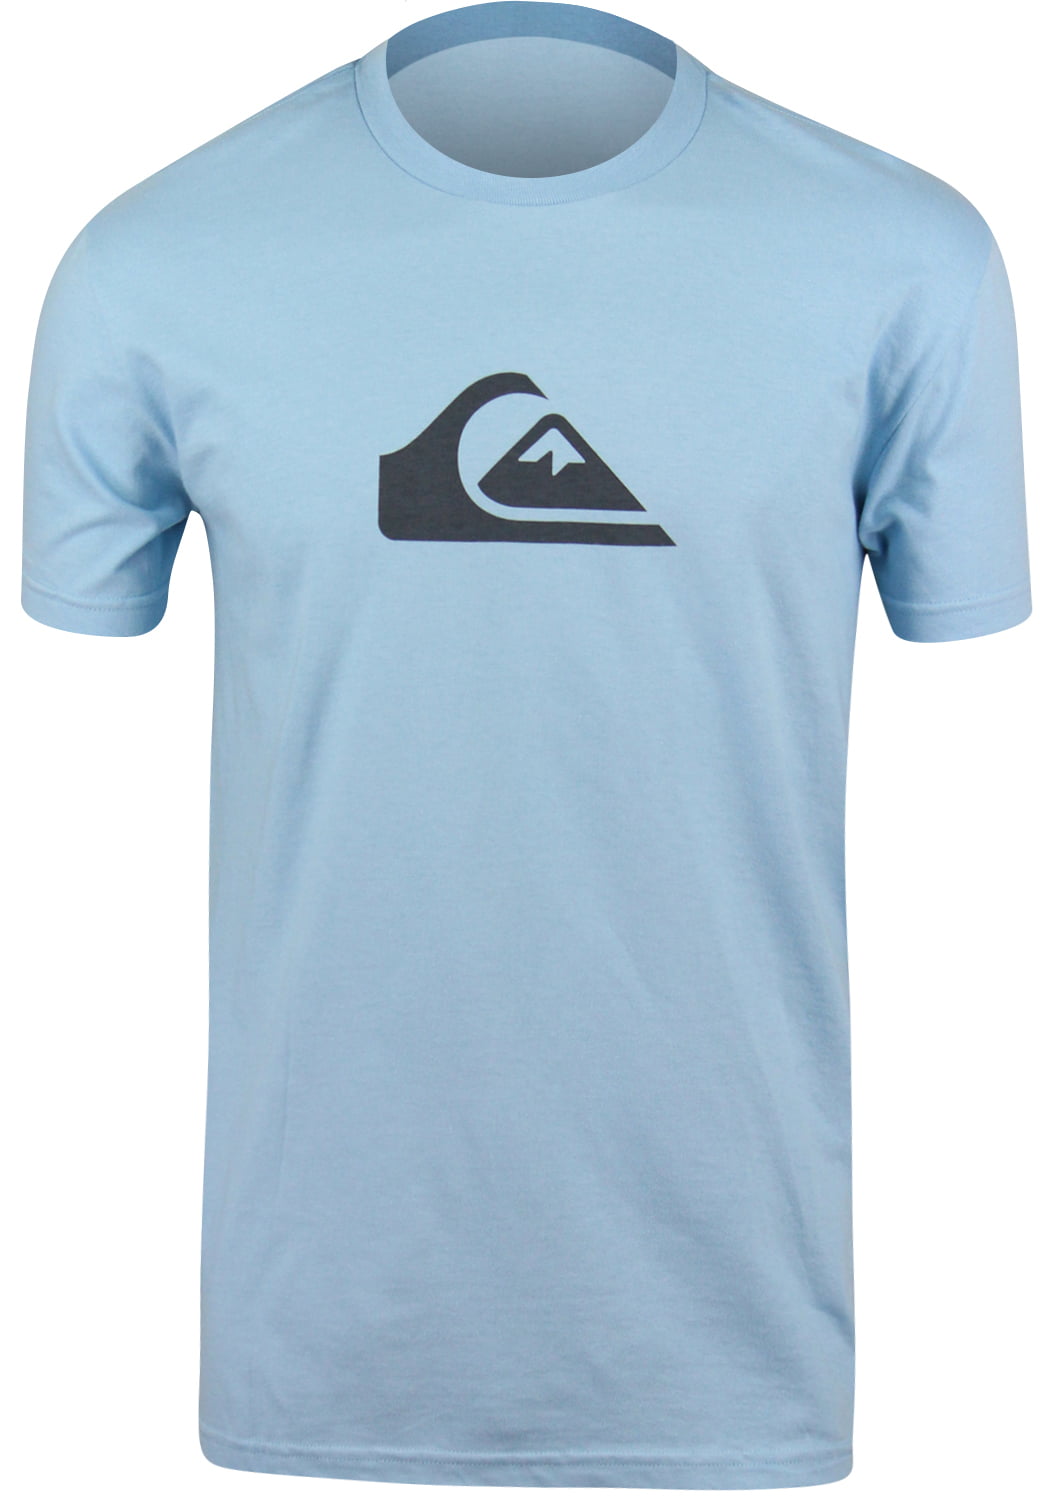 Quiksilver Mens Everyday MW Logo T-Shirt - Sky Blue/Navy - Small ...